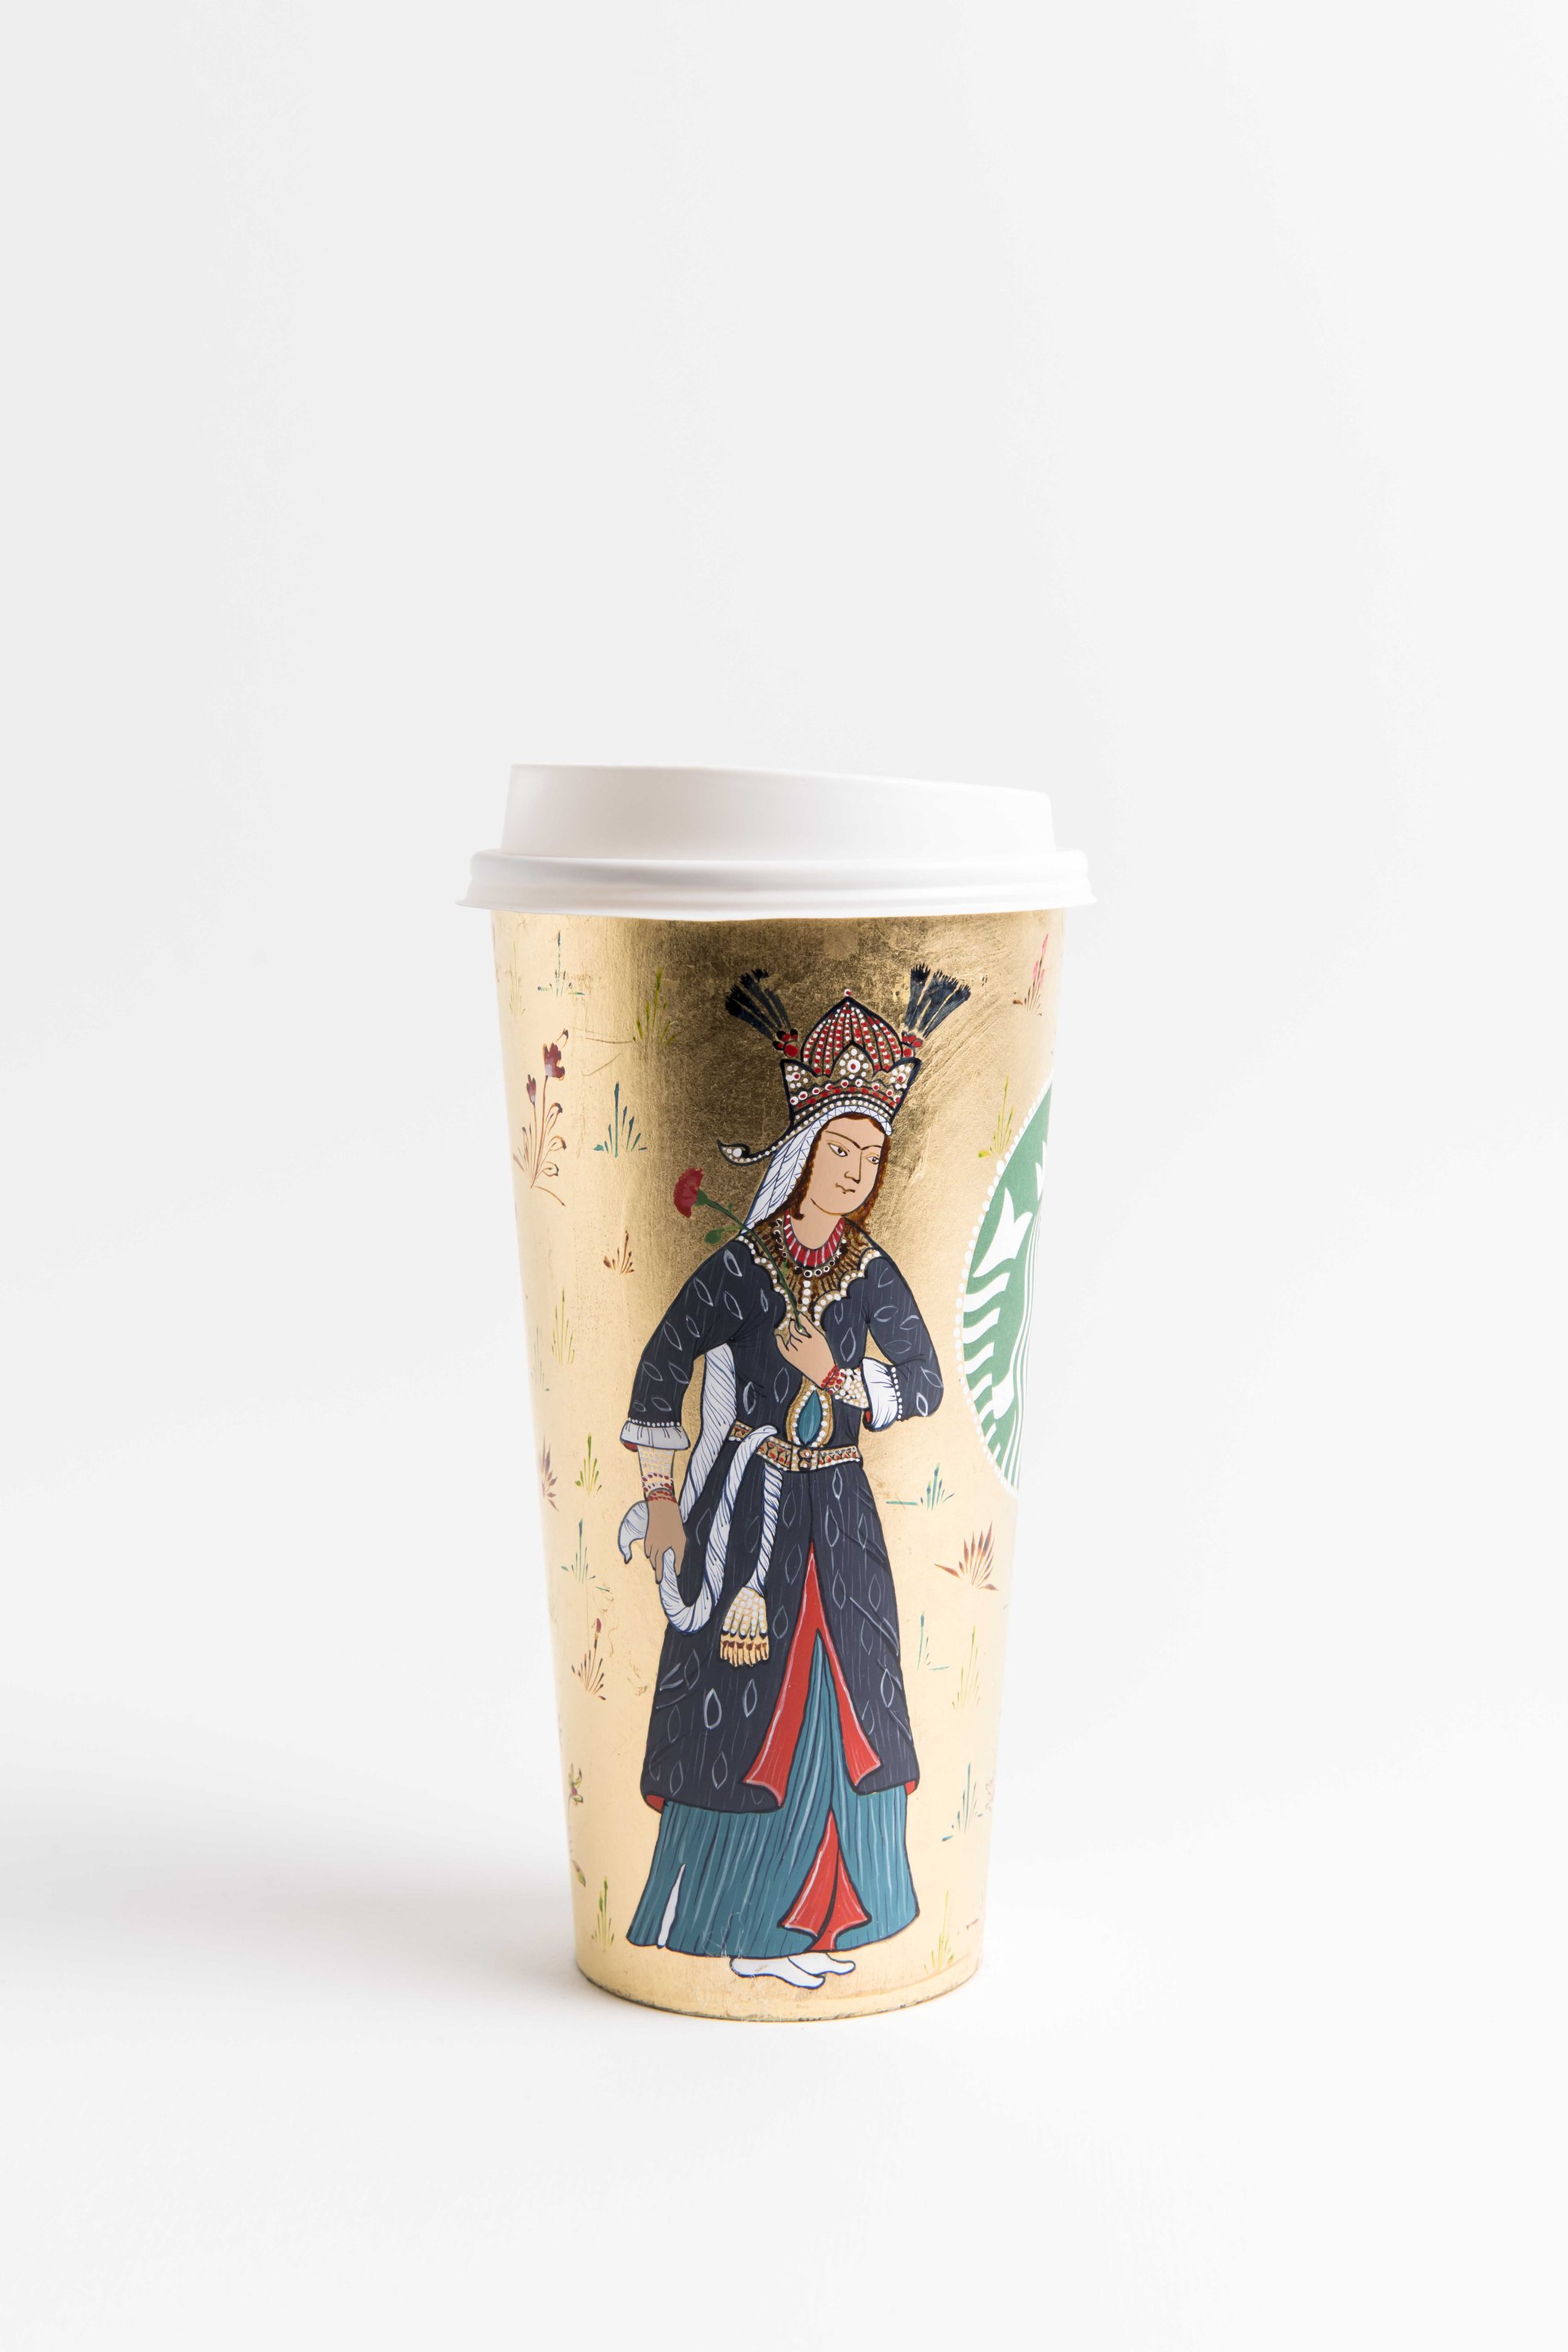 A miniature on a Starbucks coffee cup by Onur Hastürk.